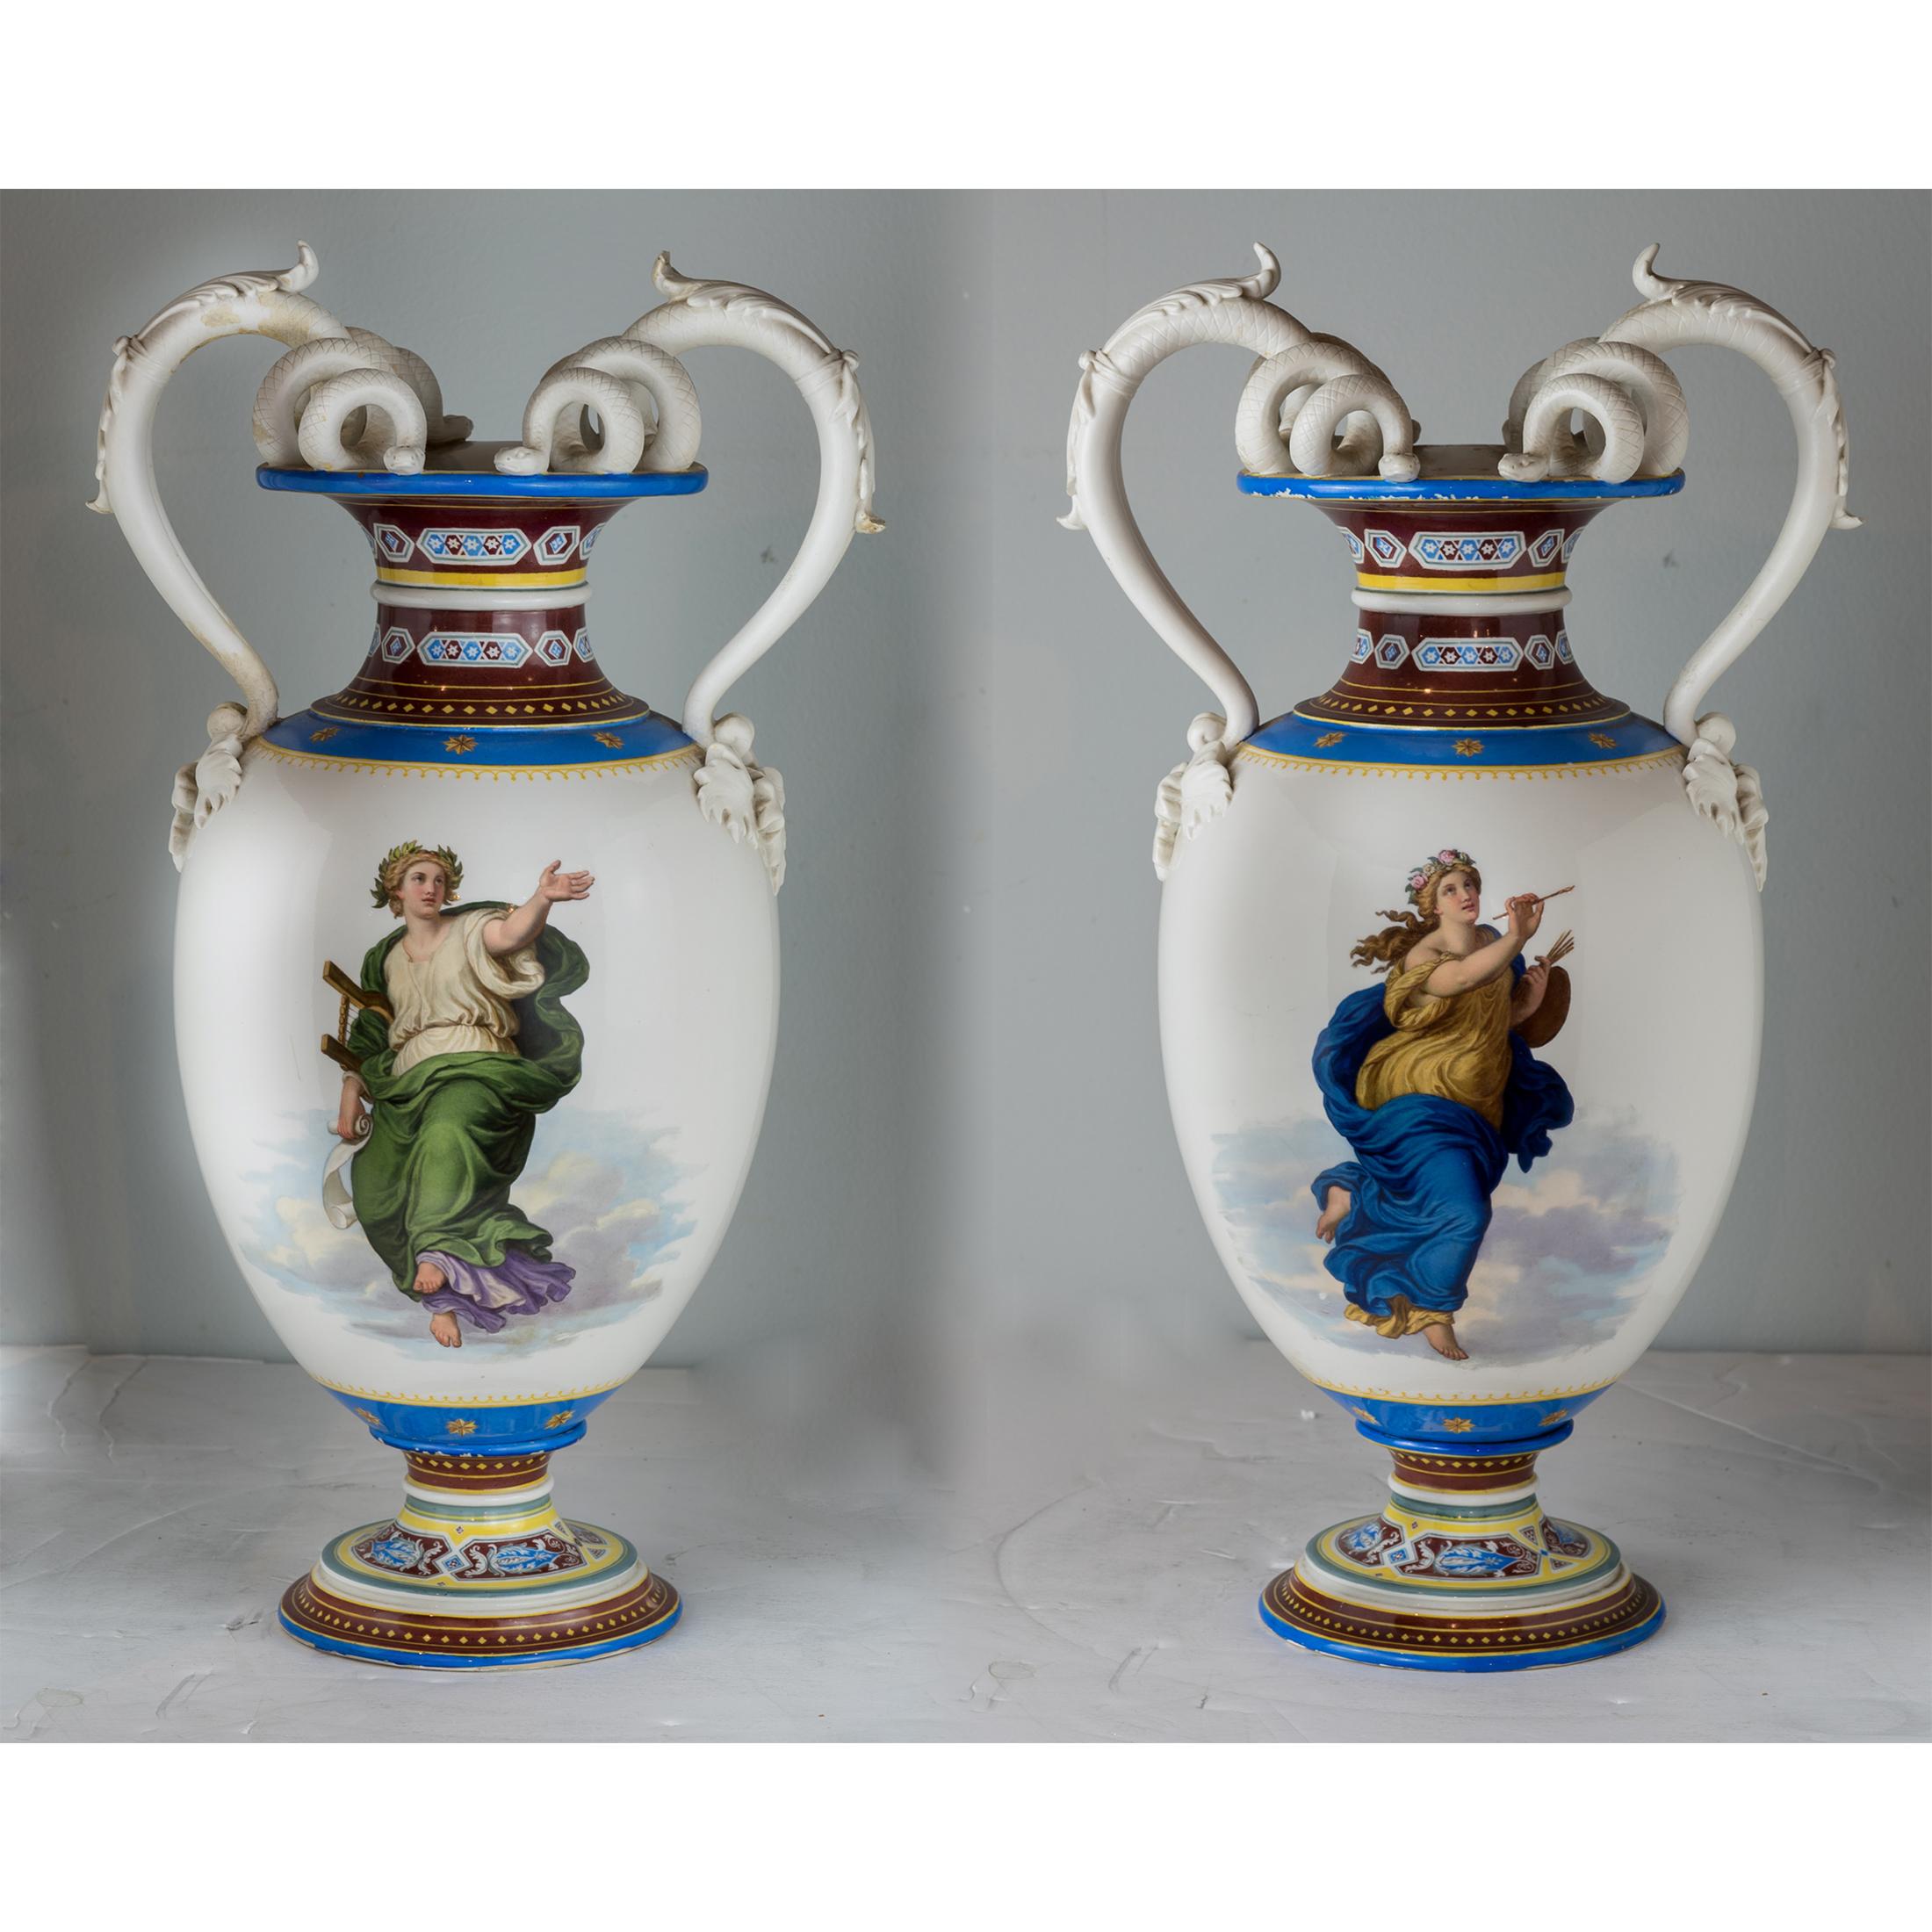 Fine quality pair of painted KPM porcelain vases

Date: 19th century
Origin: German
Dimension: 16 1/2 in. x 9 1/2 in.